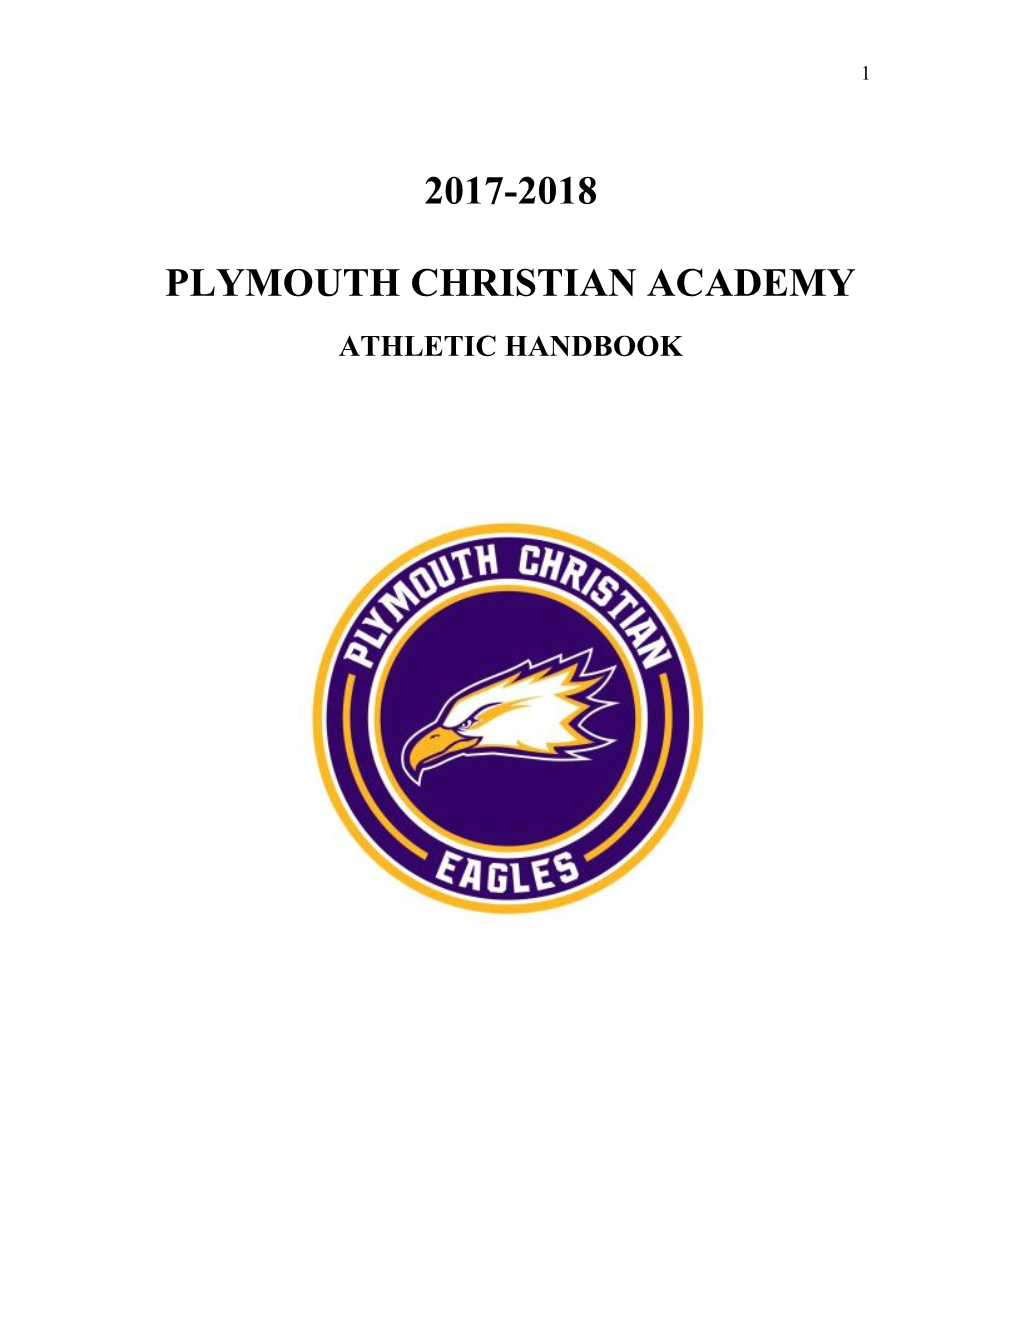 PCA-Athletics-Handbook-2017-2018